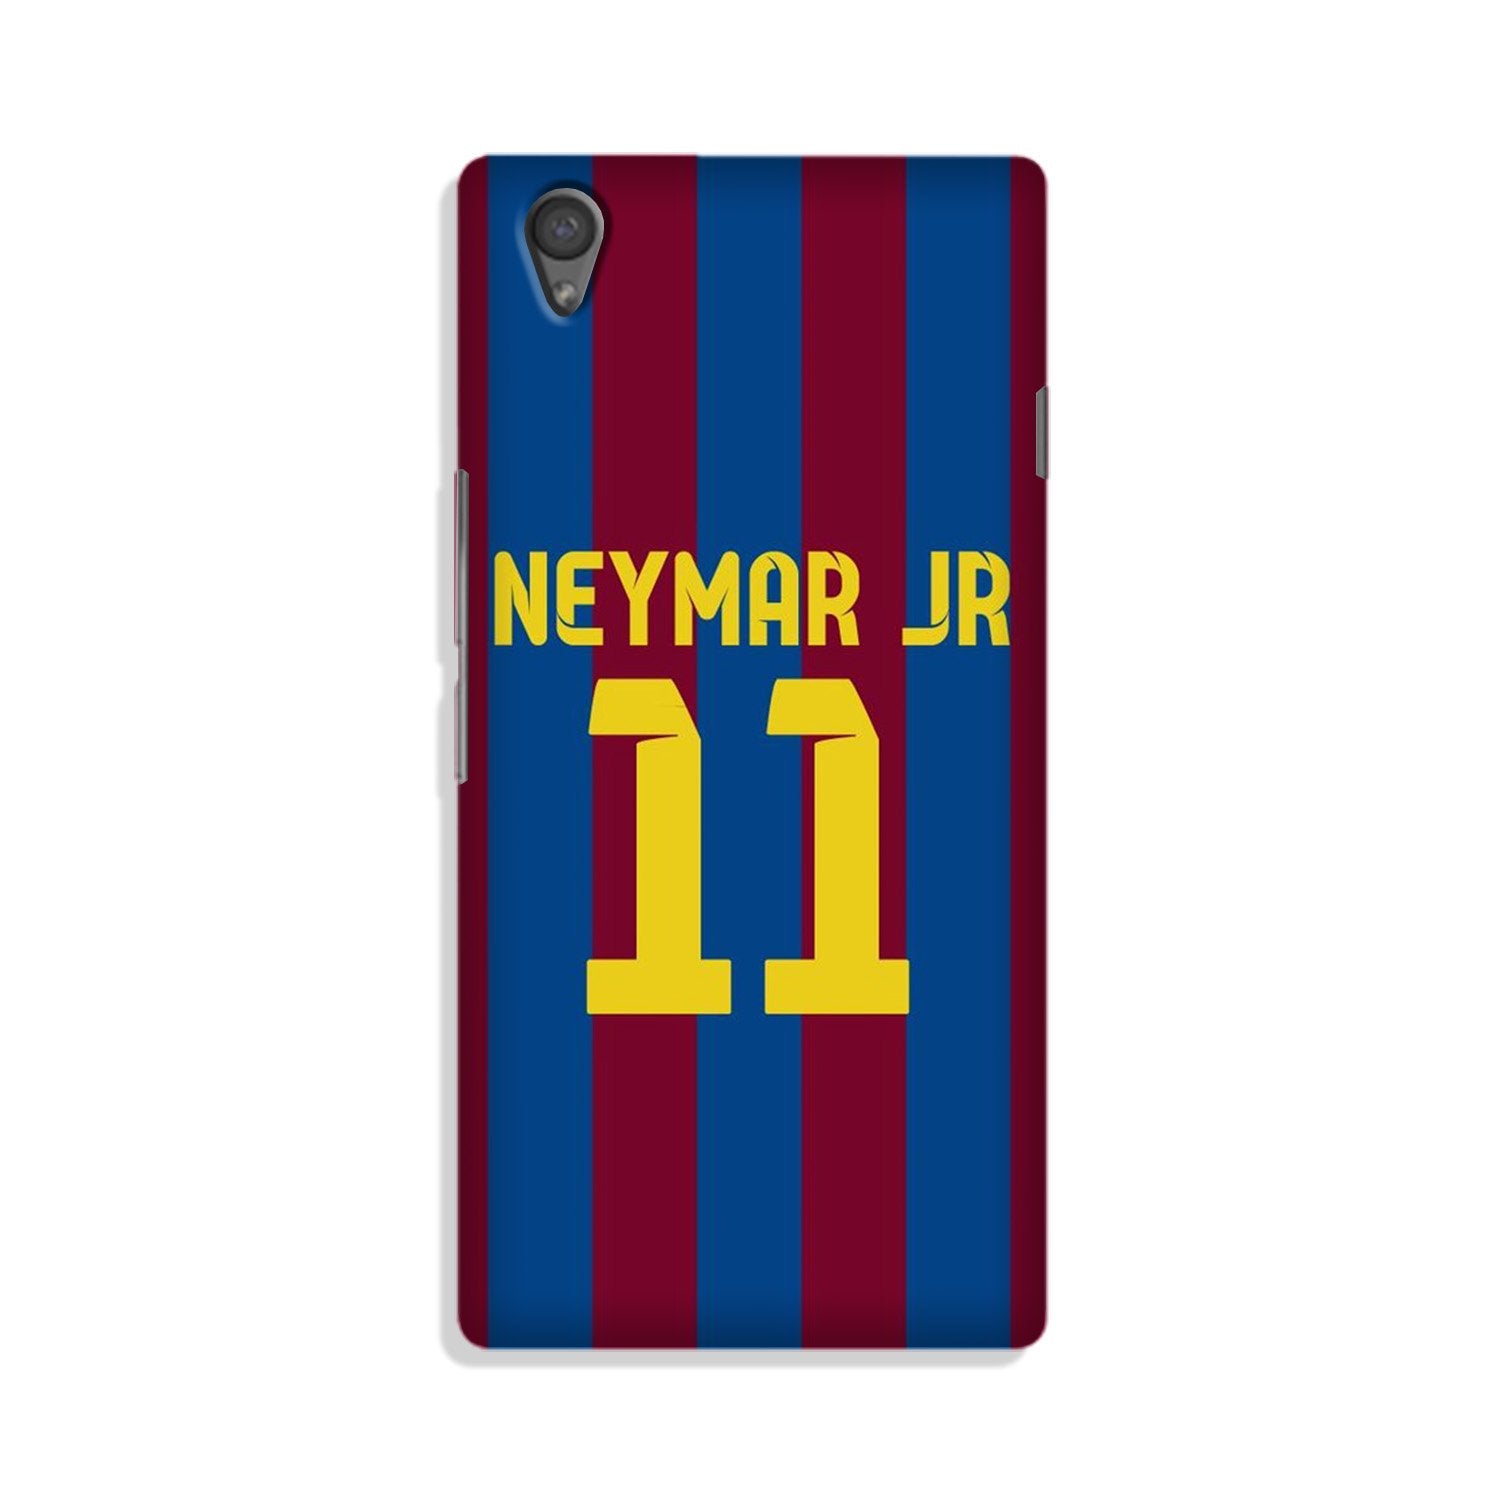 Neymar Jr Case for Vivo Y51L(Design - 162)